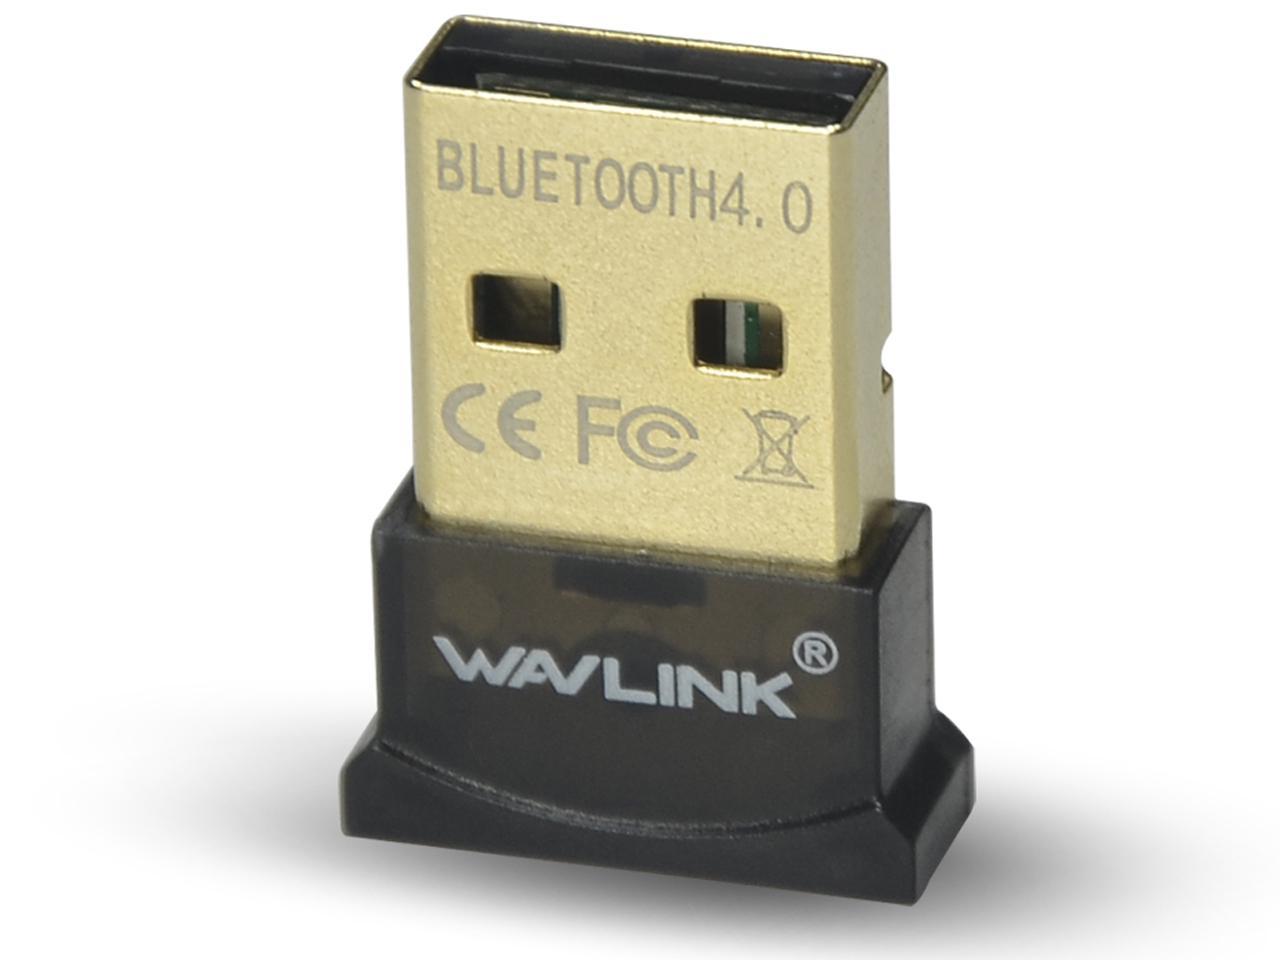 wavlink nano wireless bluetooth csr 4.0 dongle driver error